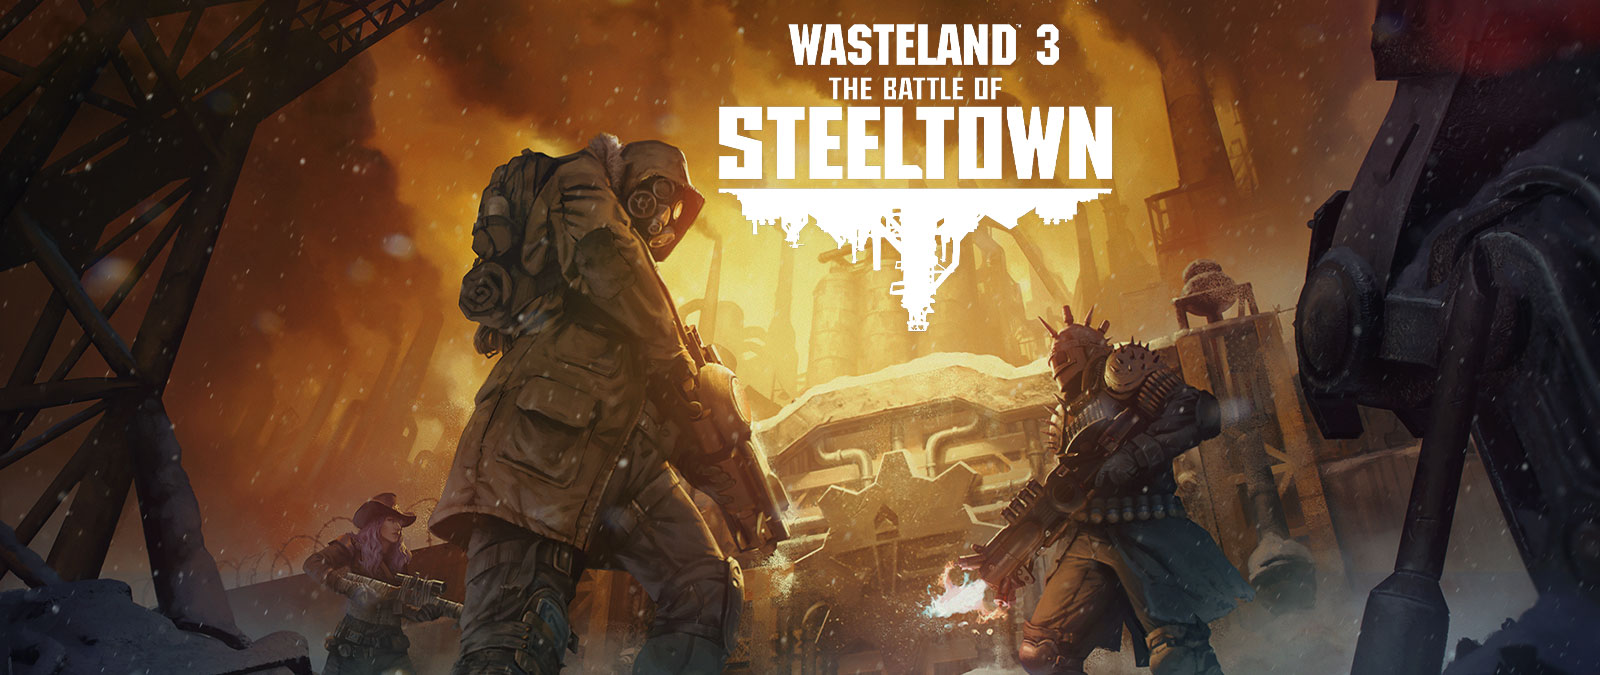 Wasteland 3: The Battle of Steeltown三個角色全副武裝拿著武器，站在工業背景的門口前